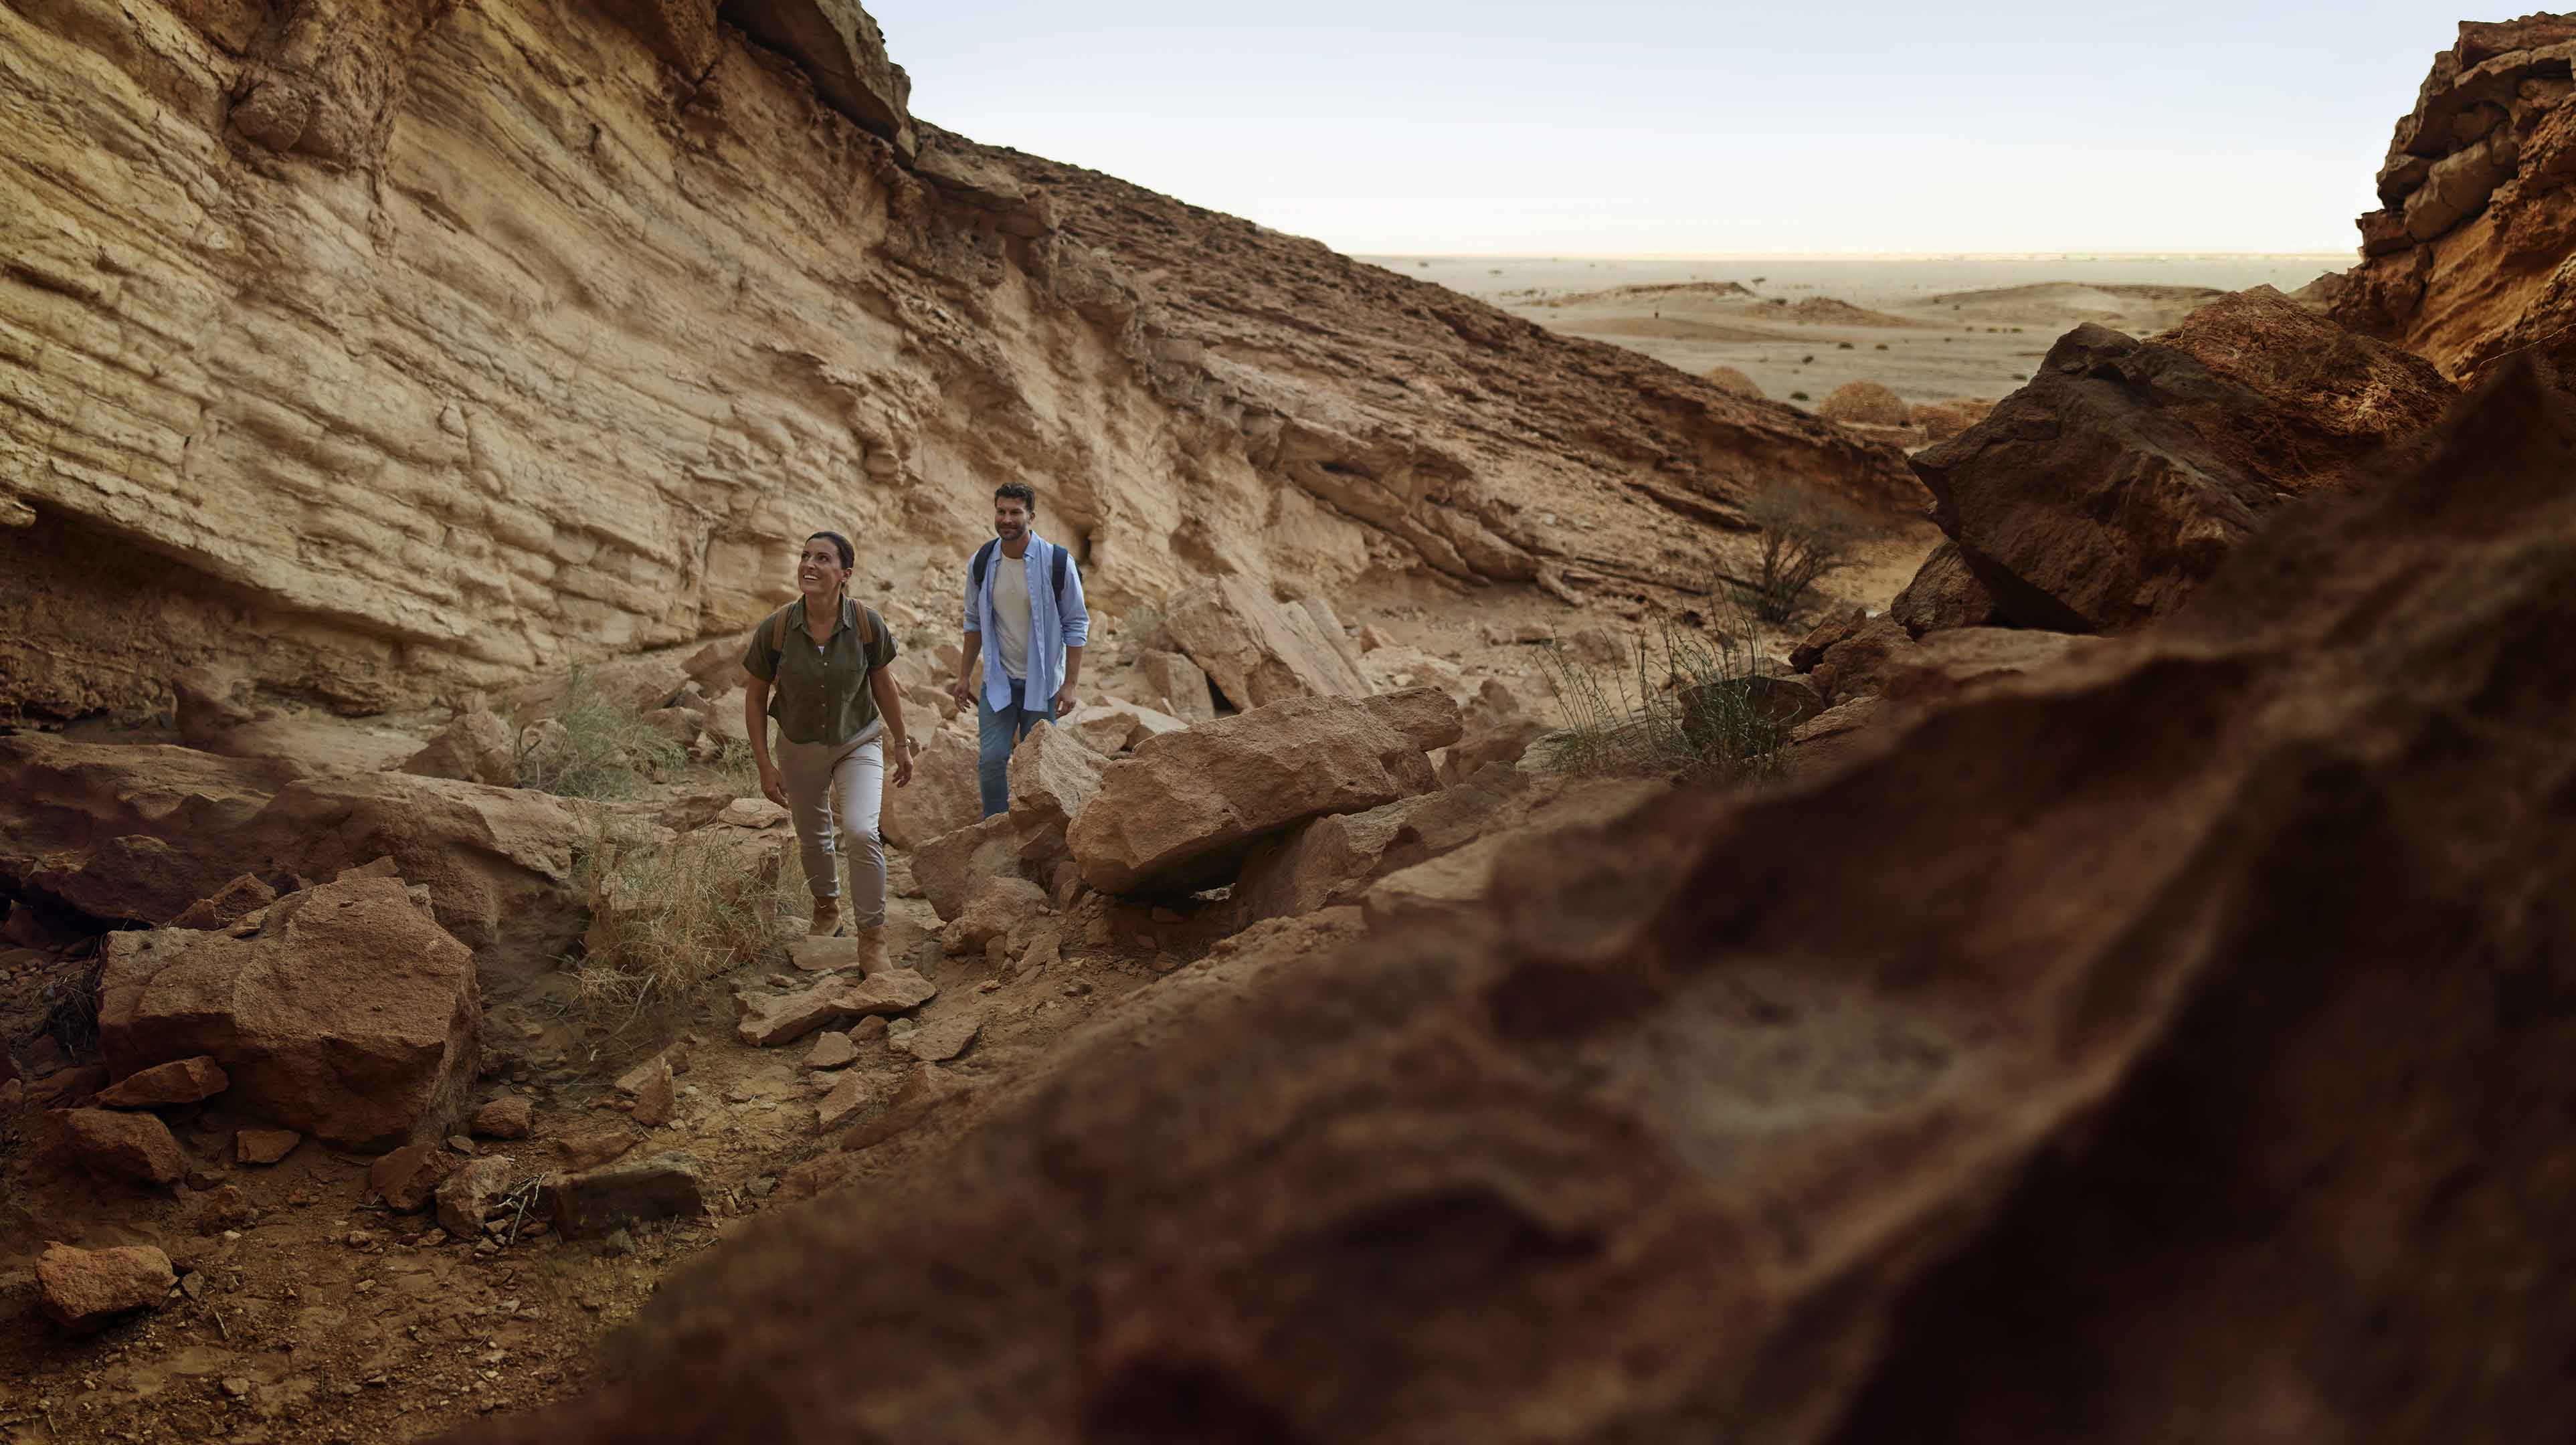 Western couple walking through a canyon in Abu Dhabi